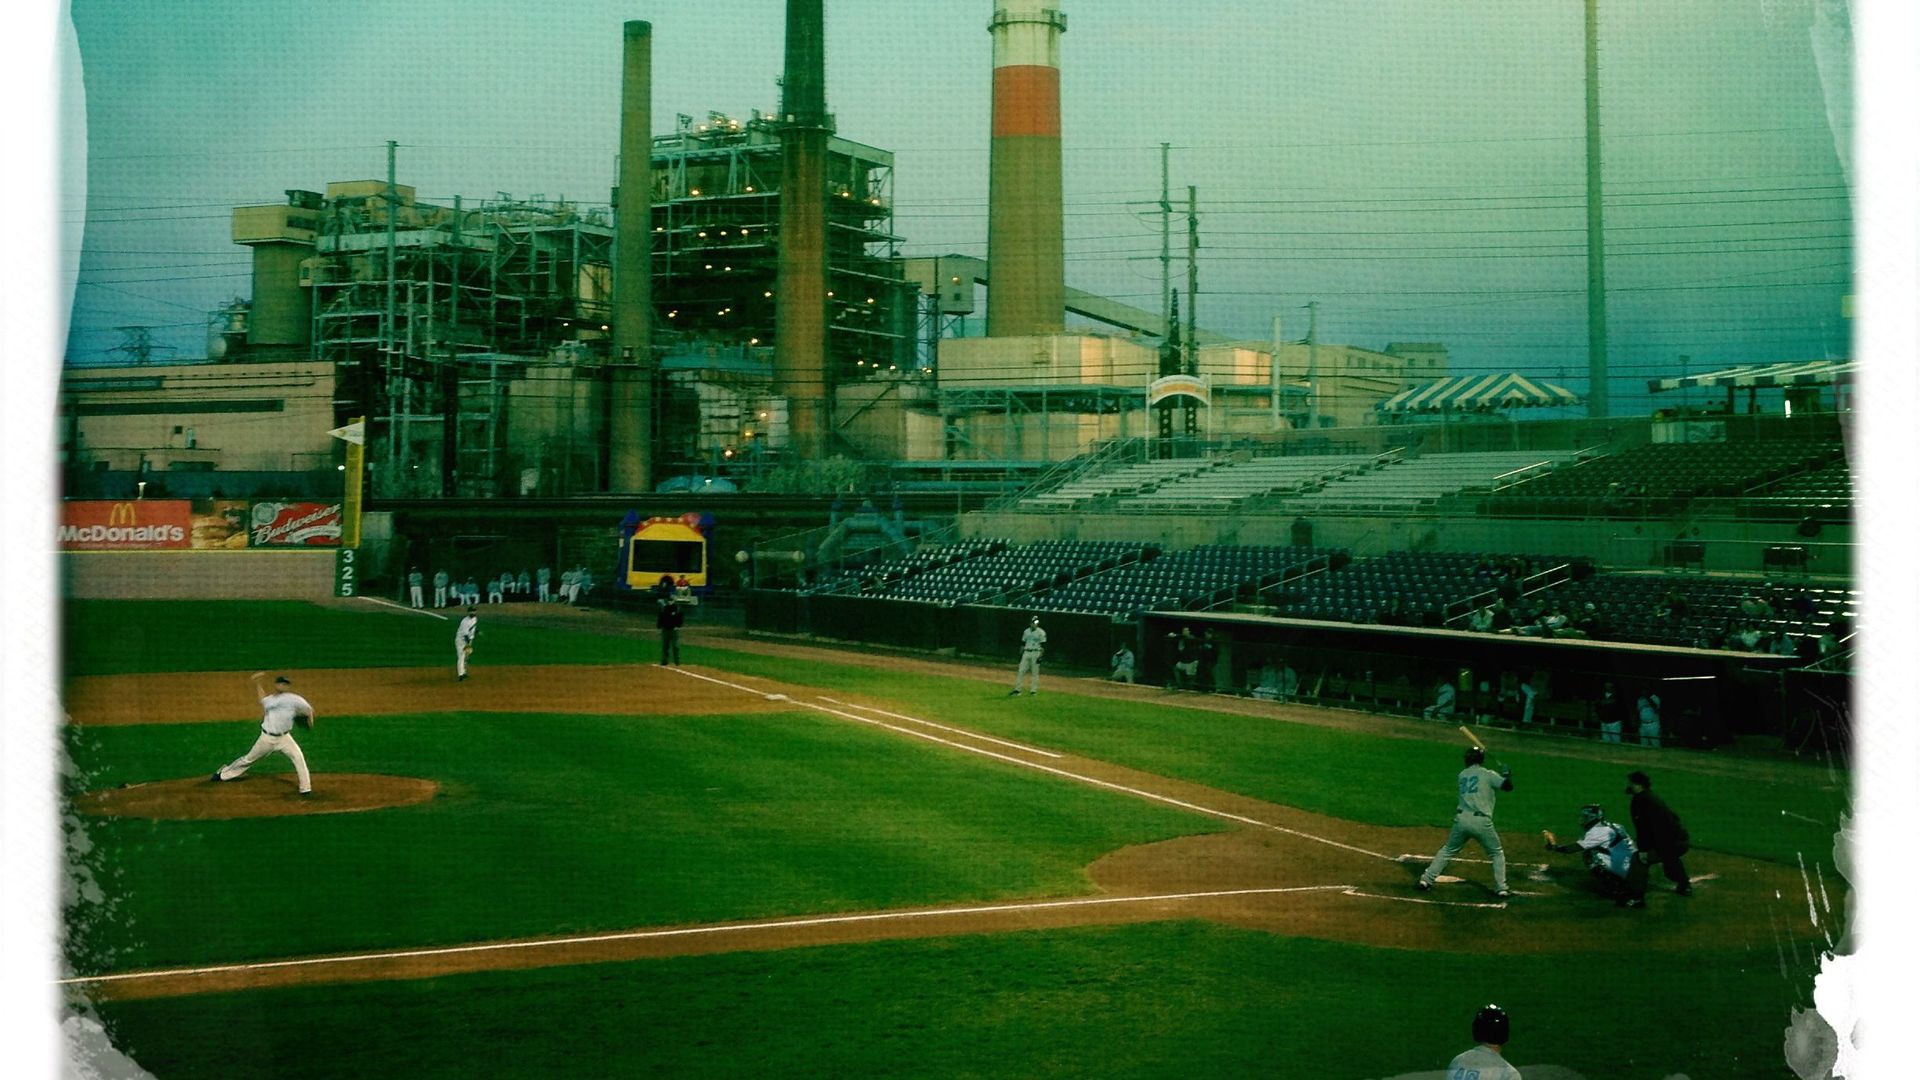 A photo of a baseball game.